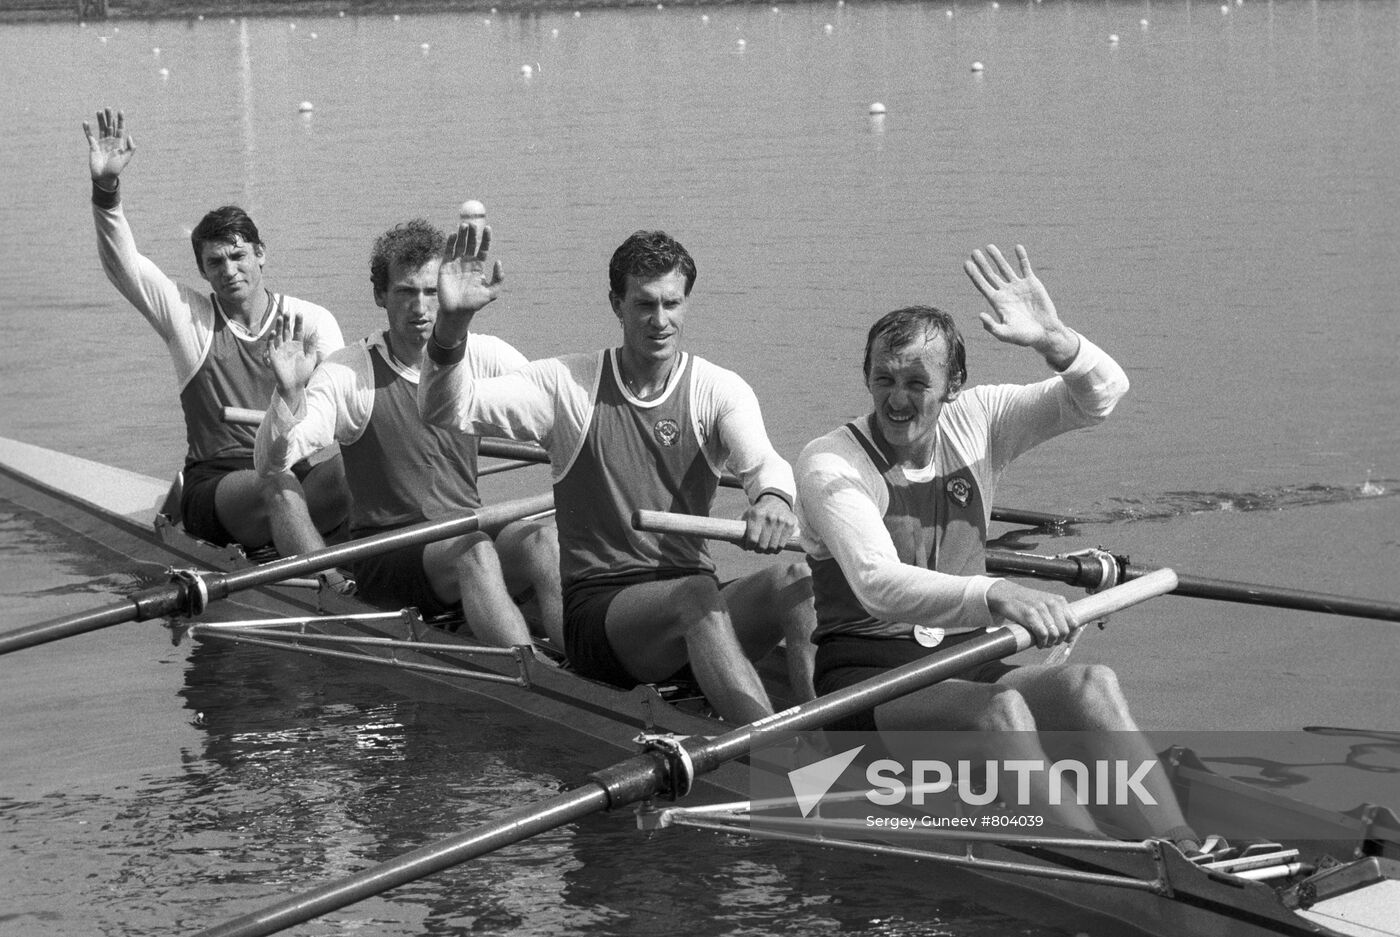 USSR rowing team